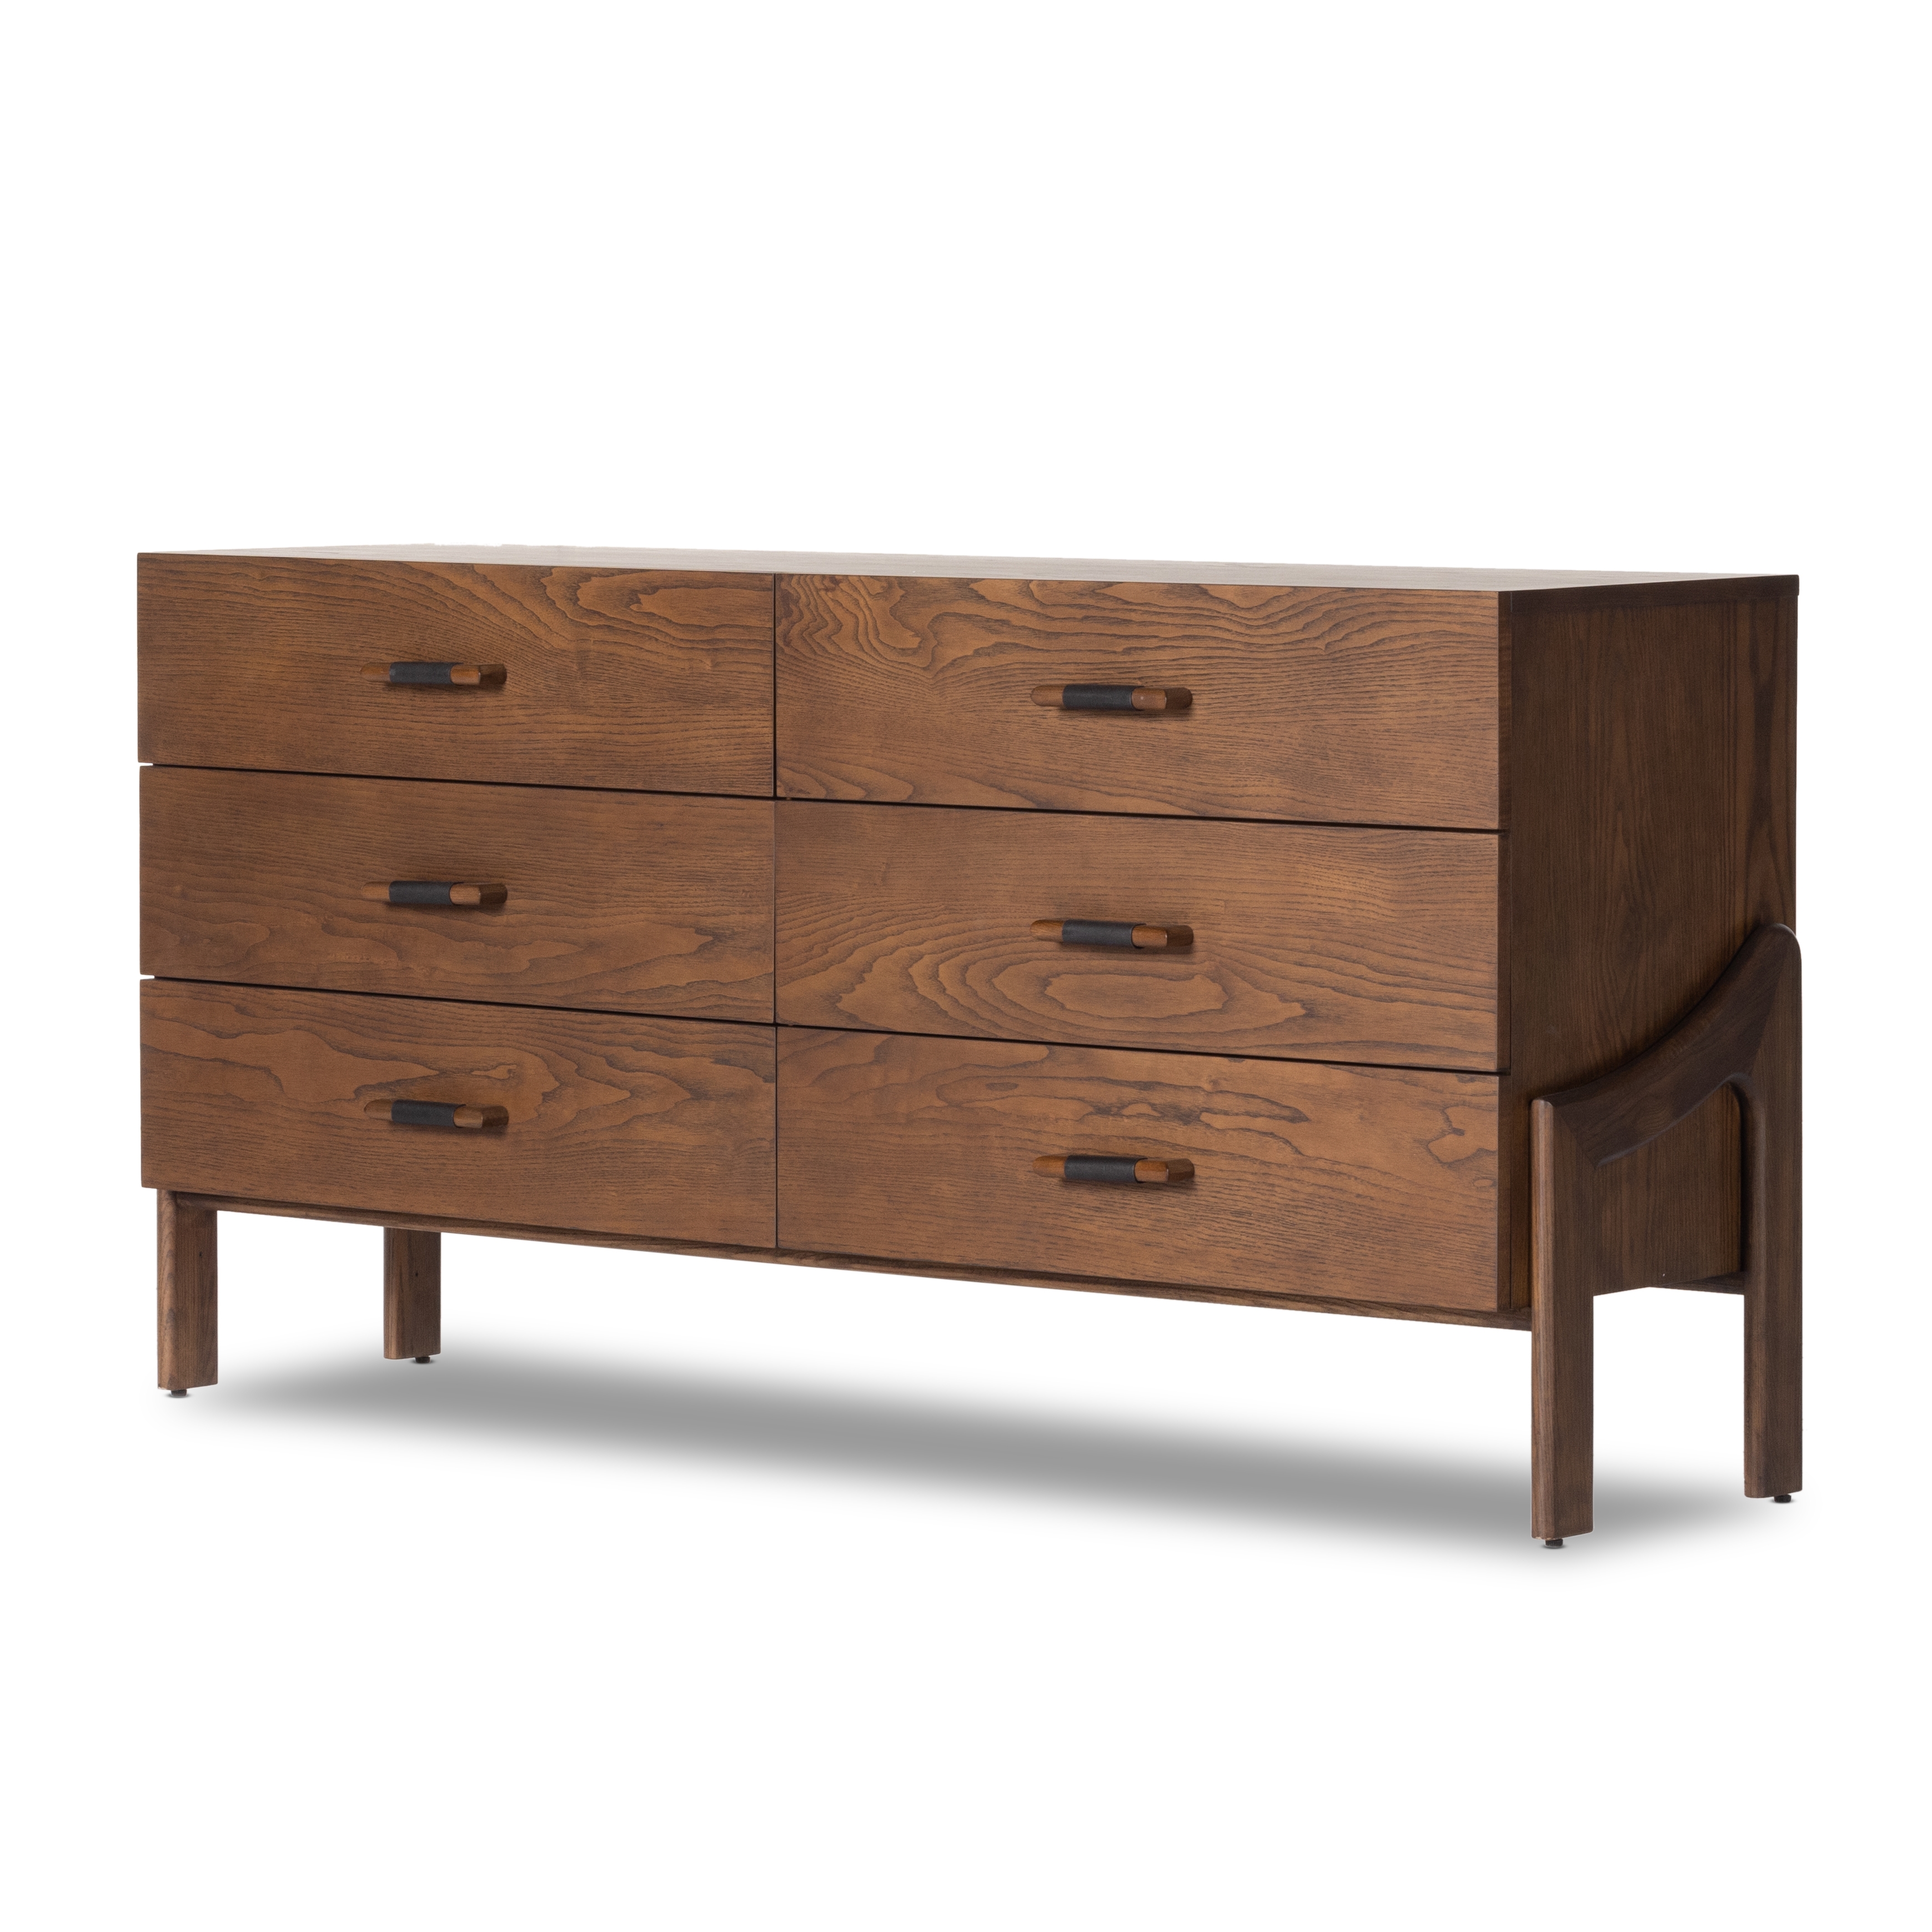 Halston 6 Drawer Dresser - Terra Brown Ash Veneer - Image 0